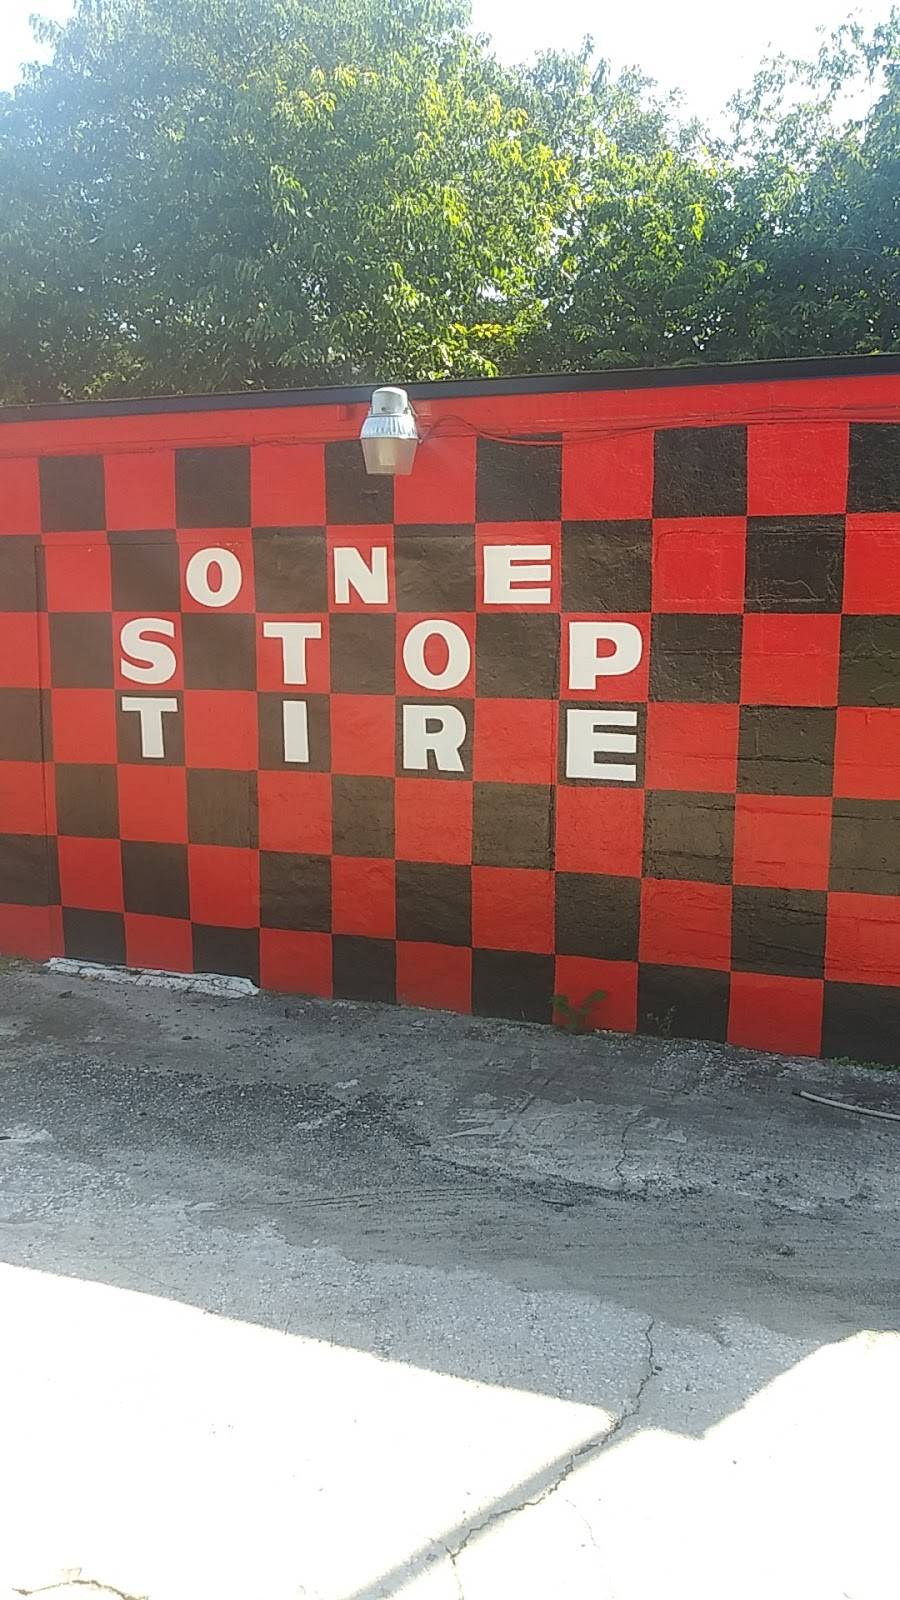 One Stop Tire Shop | 9600 Lem Turner Rd, Jacksonville, FL 32208, USA | Phone: (904) 329-3591